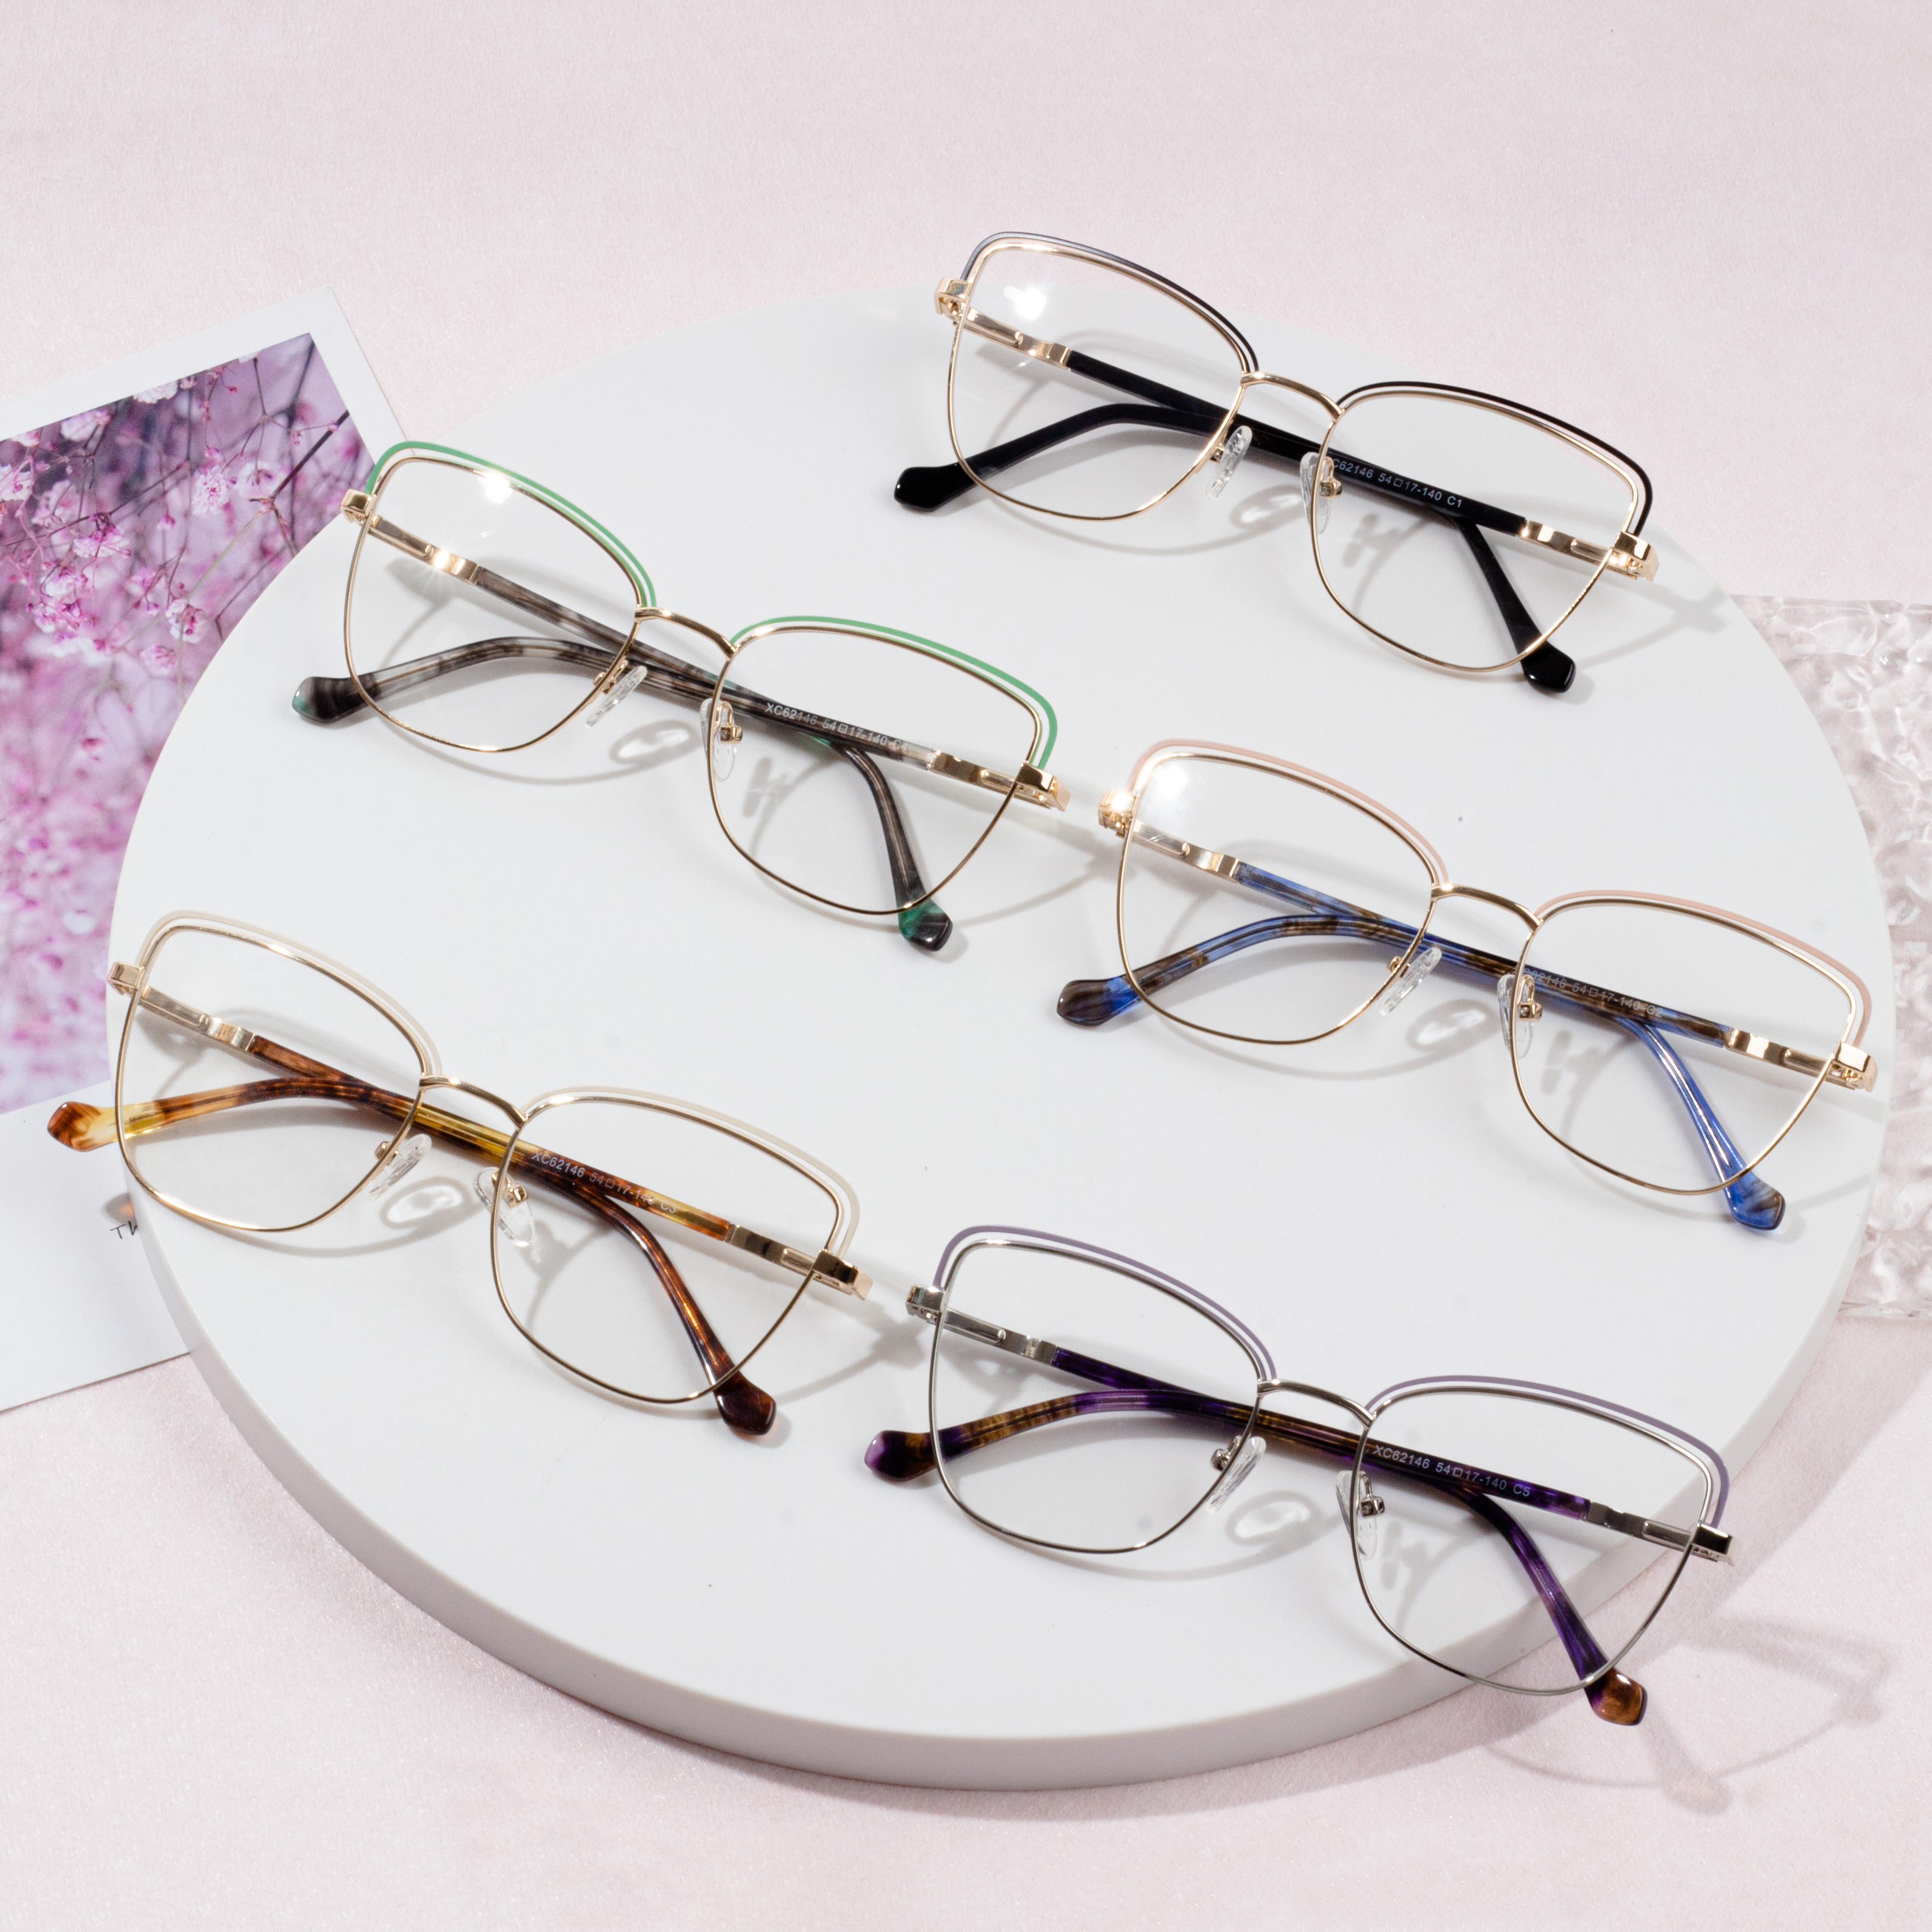 choosing eyeglass frames